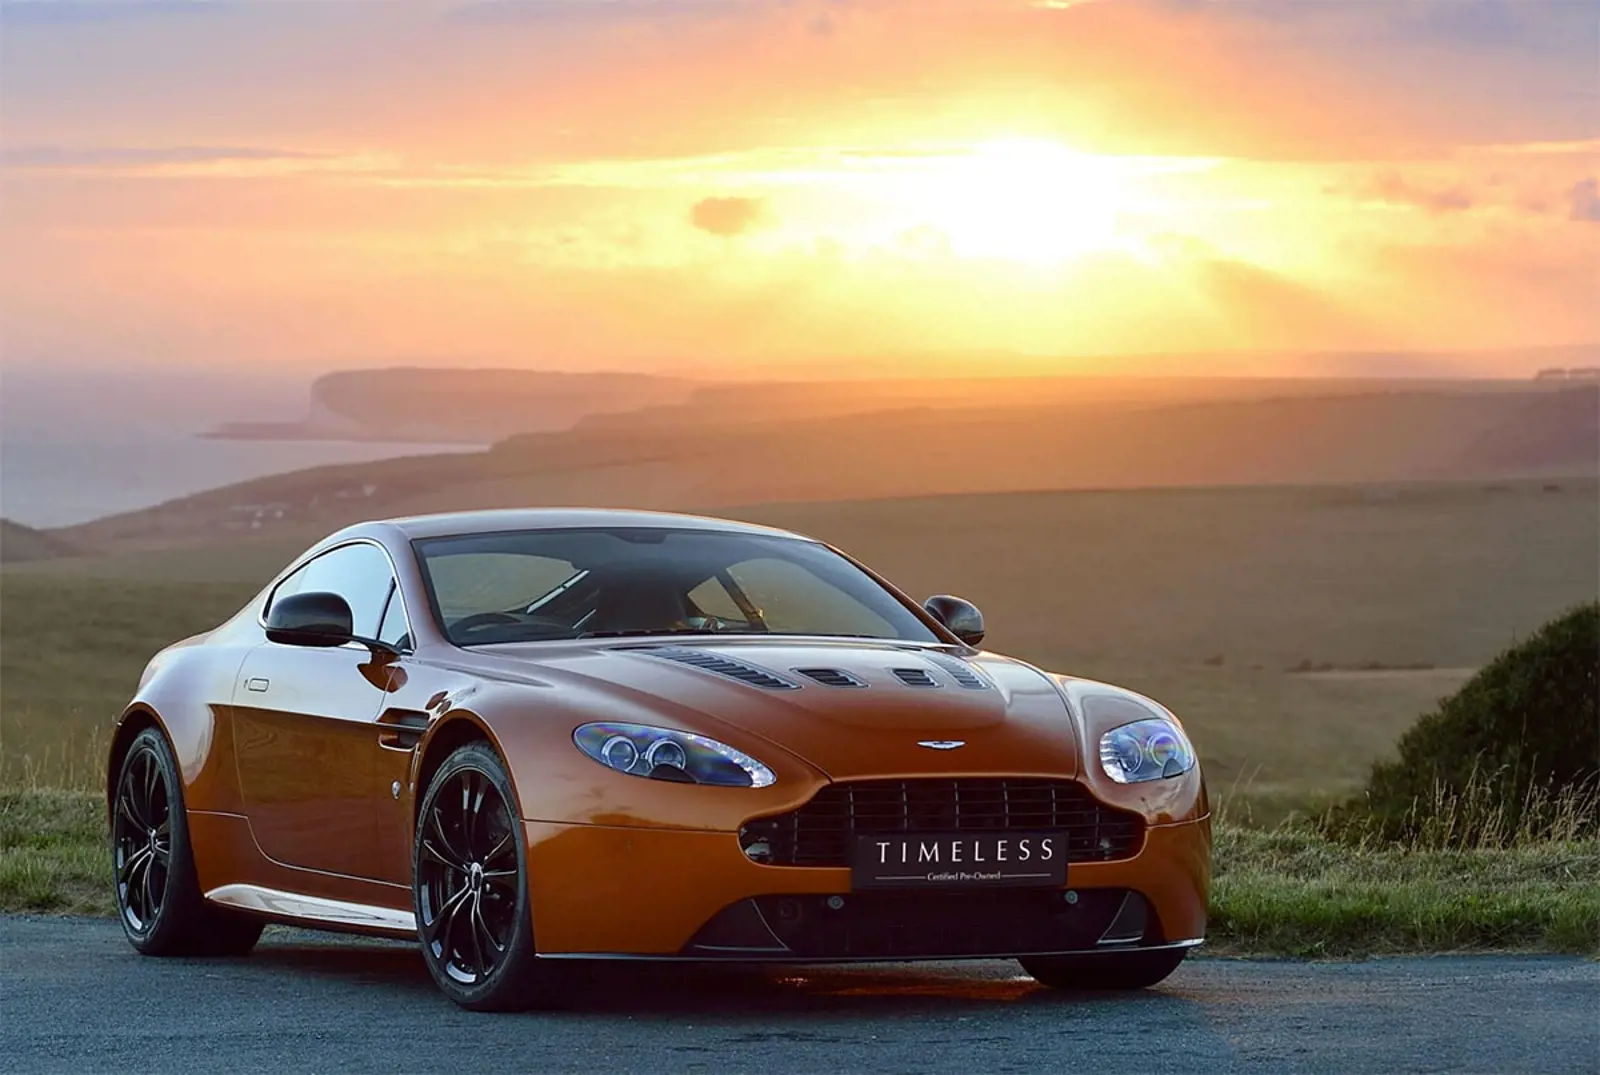 Aston Martin Timeless - Why choose a Timeless Aston Martin